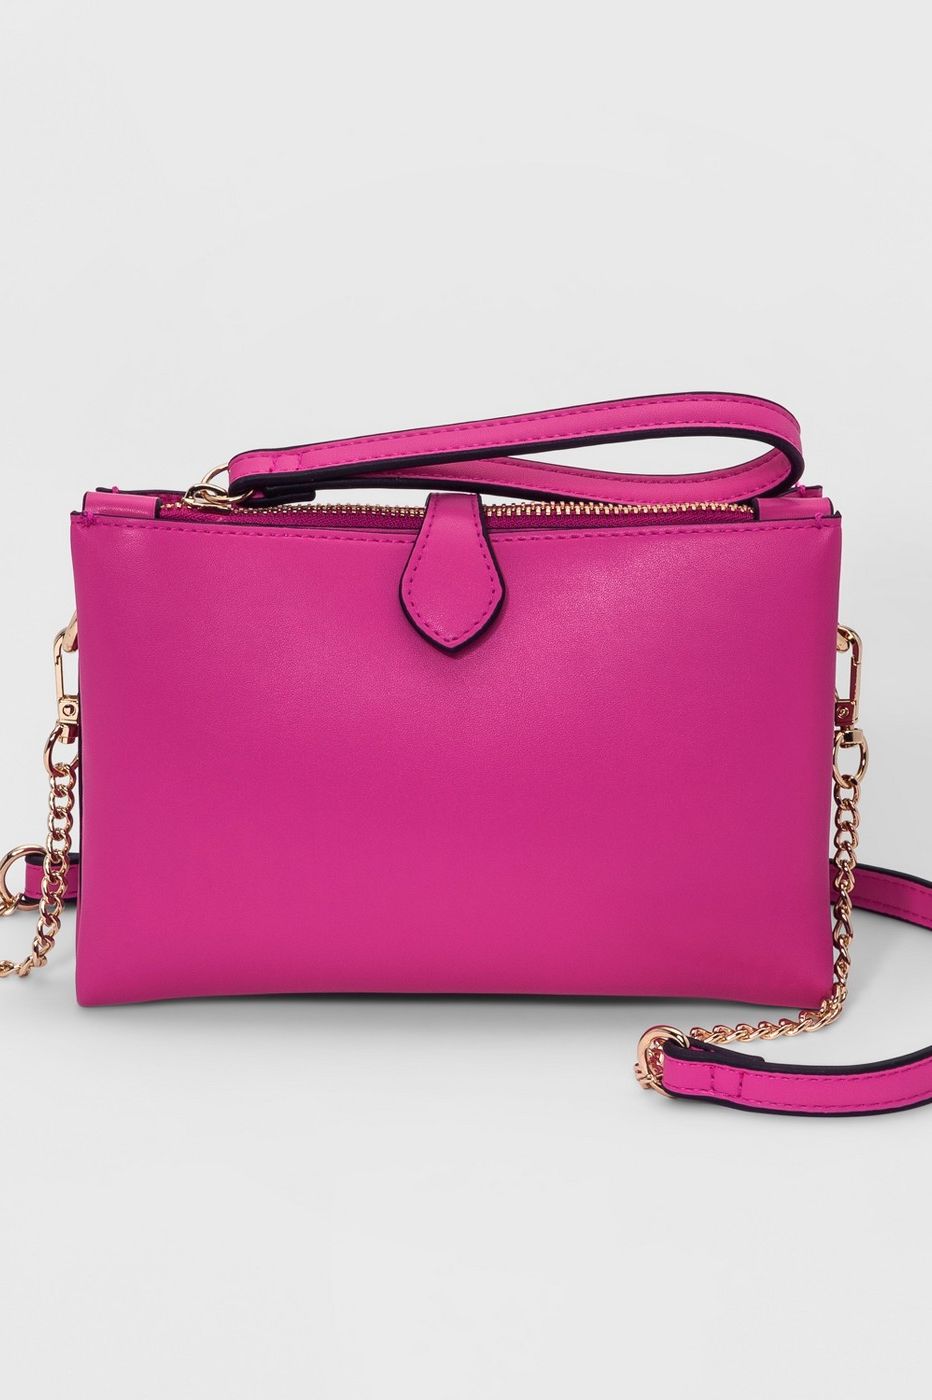 Handbag, Bag, Pink, Magenta, Fashion accessory, Shoulder bag, Leather, Purple, Coin purse, Wristlet, 